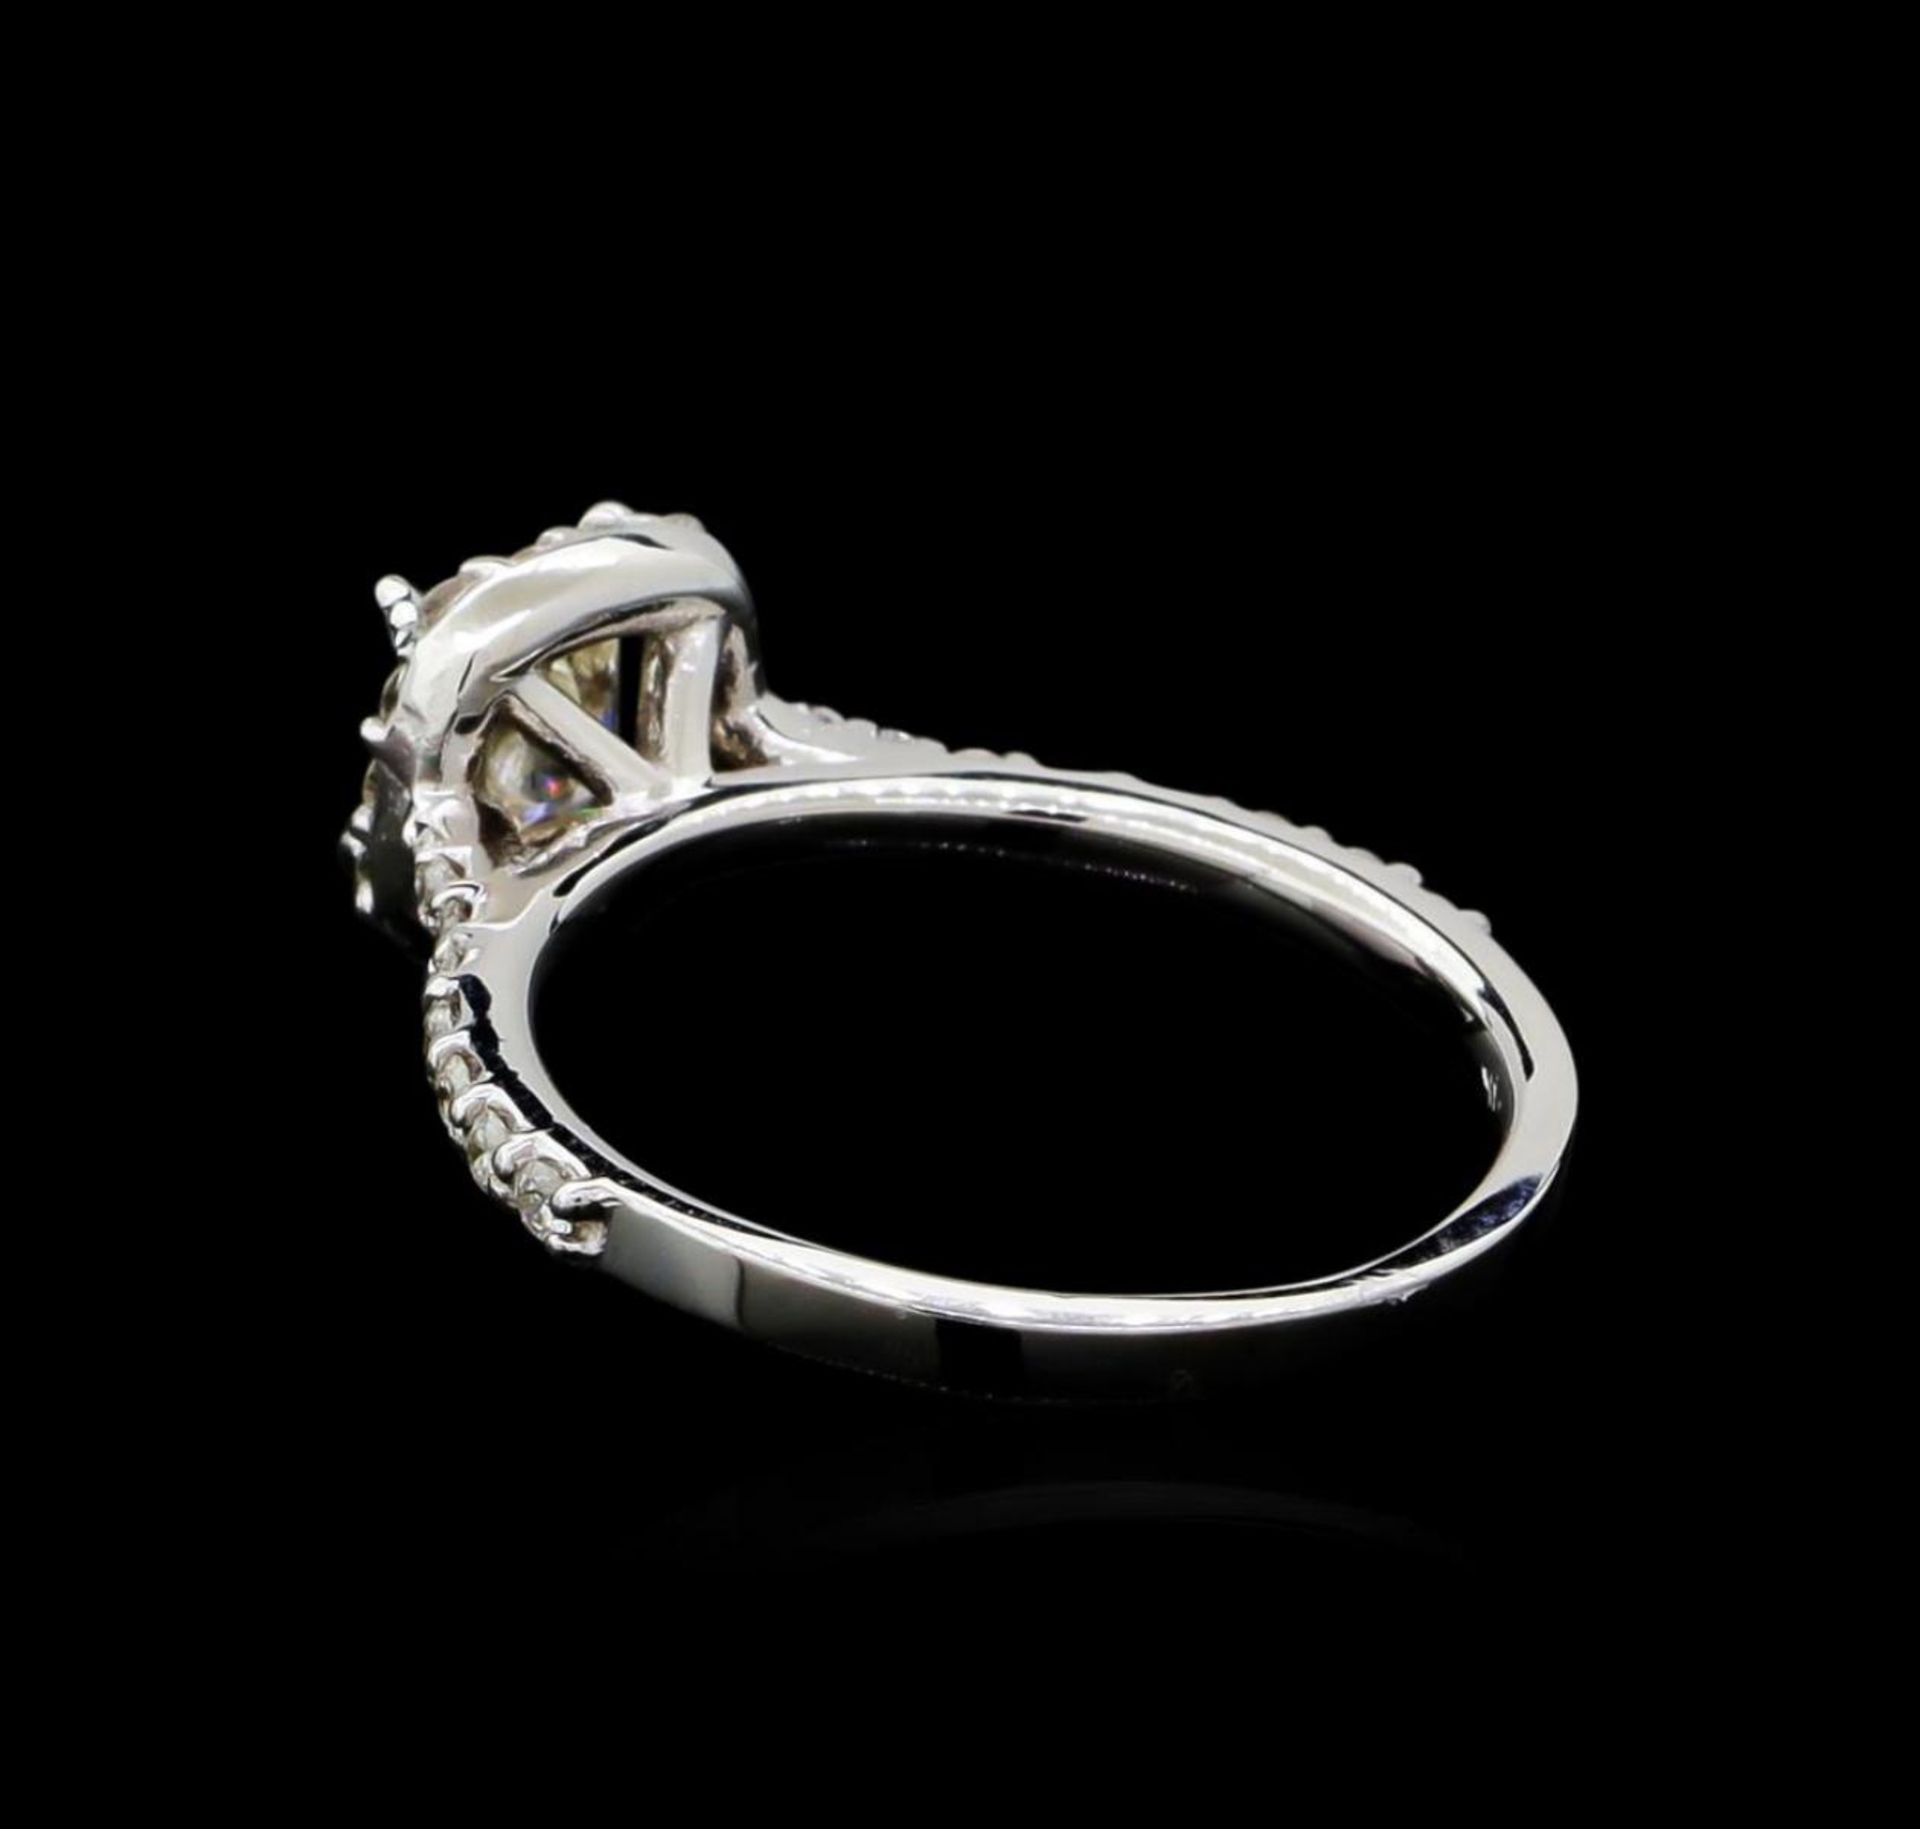 1.17 ctw Diamond Ring - 14KT White Gold - Image 3 of 5